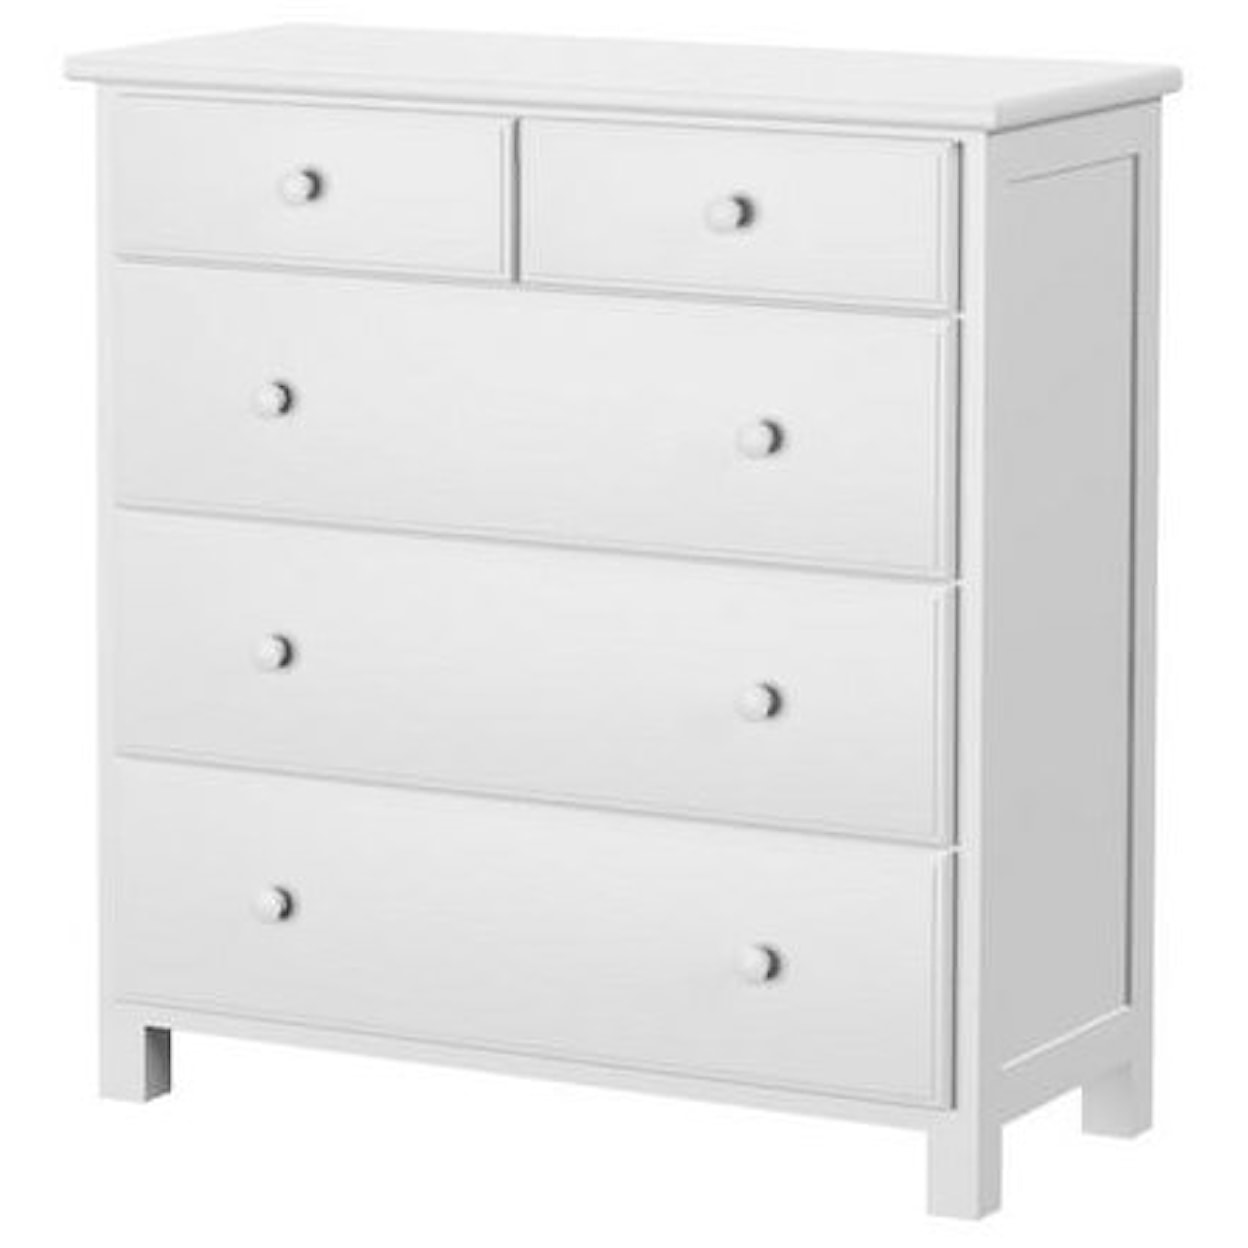 Jackpot Kids Storage Solutions 2 Over 3 Drawer Dresser in White